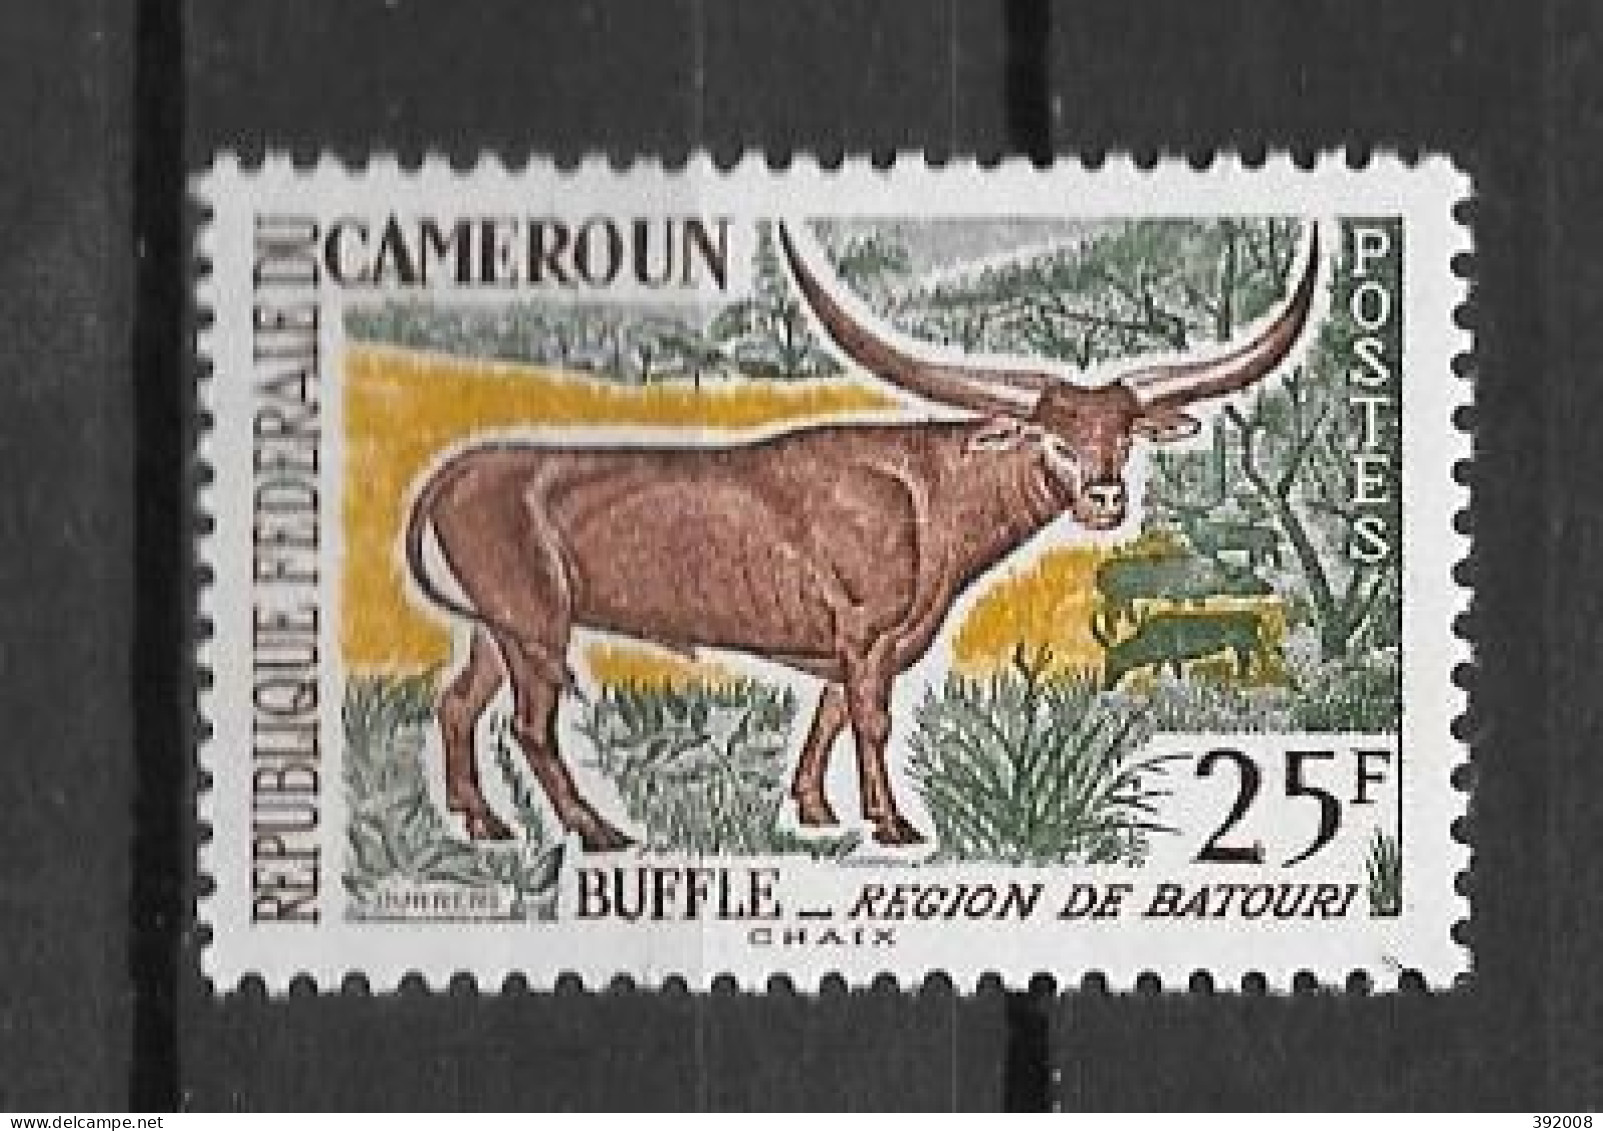 1962 - N°351** MNH - Animaux - Kameroen (1960-...)